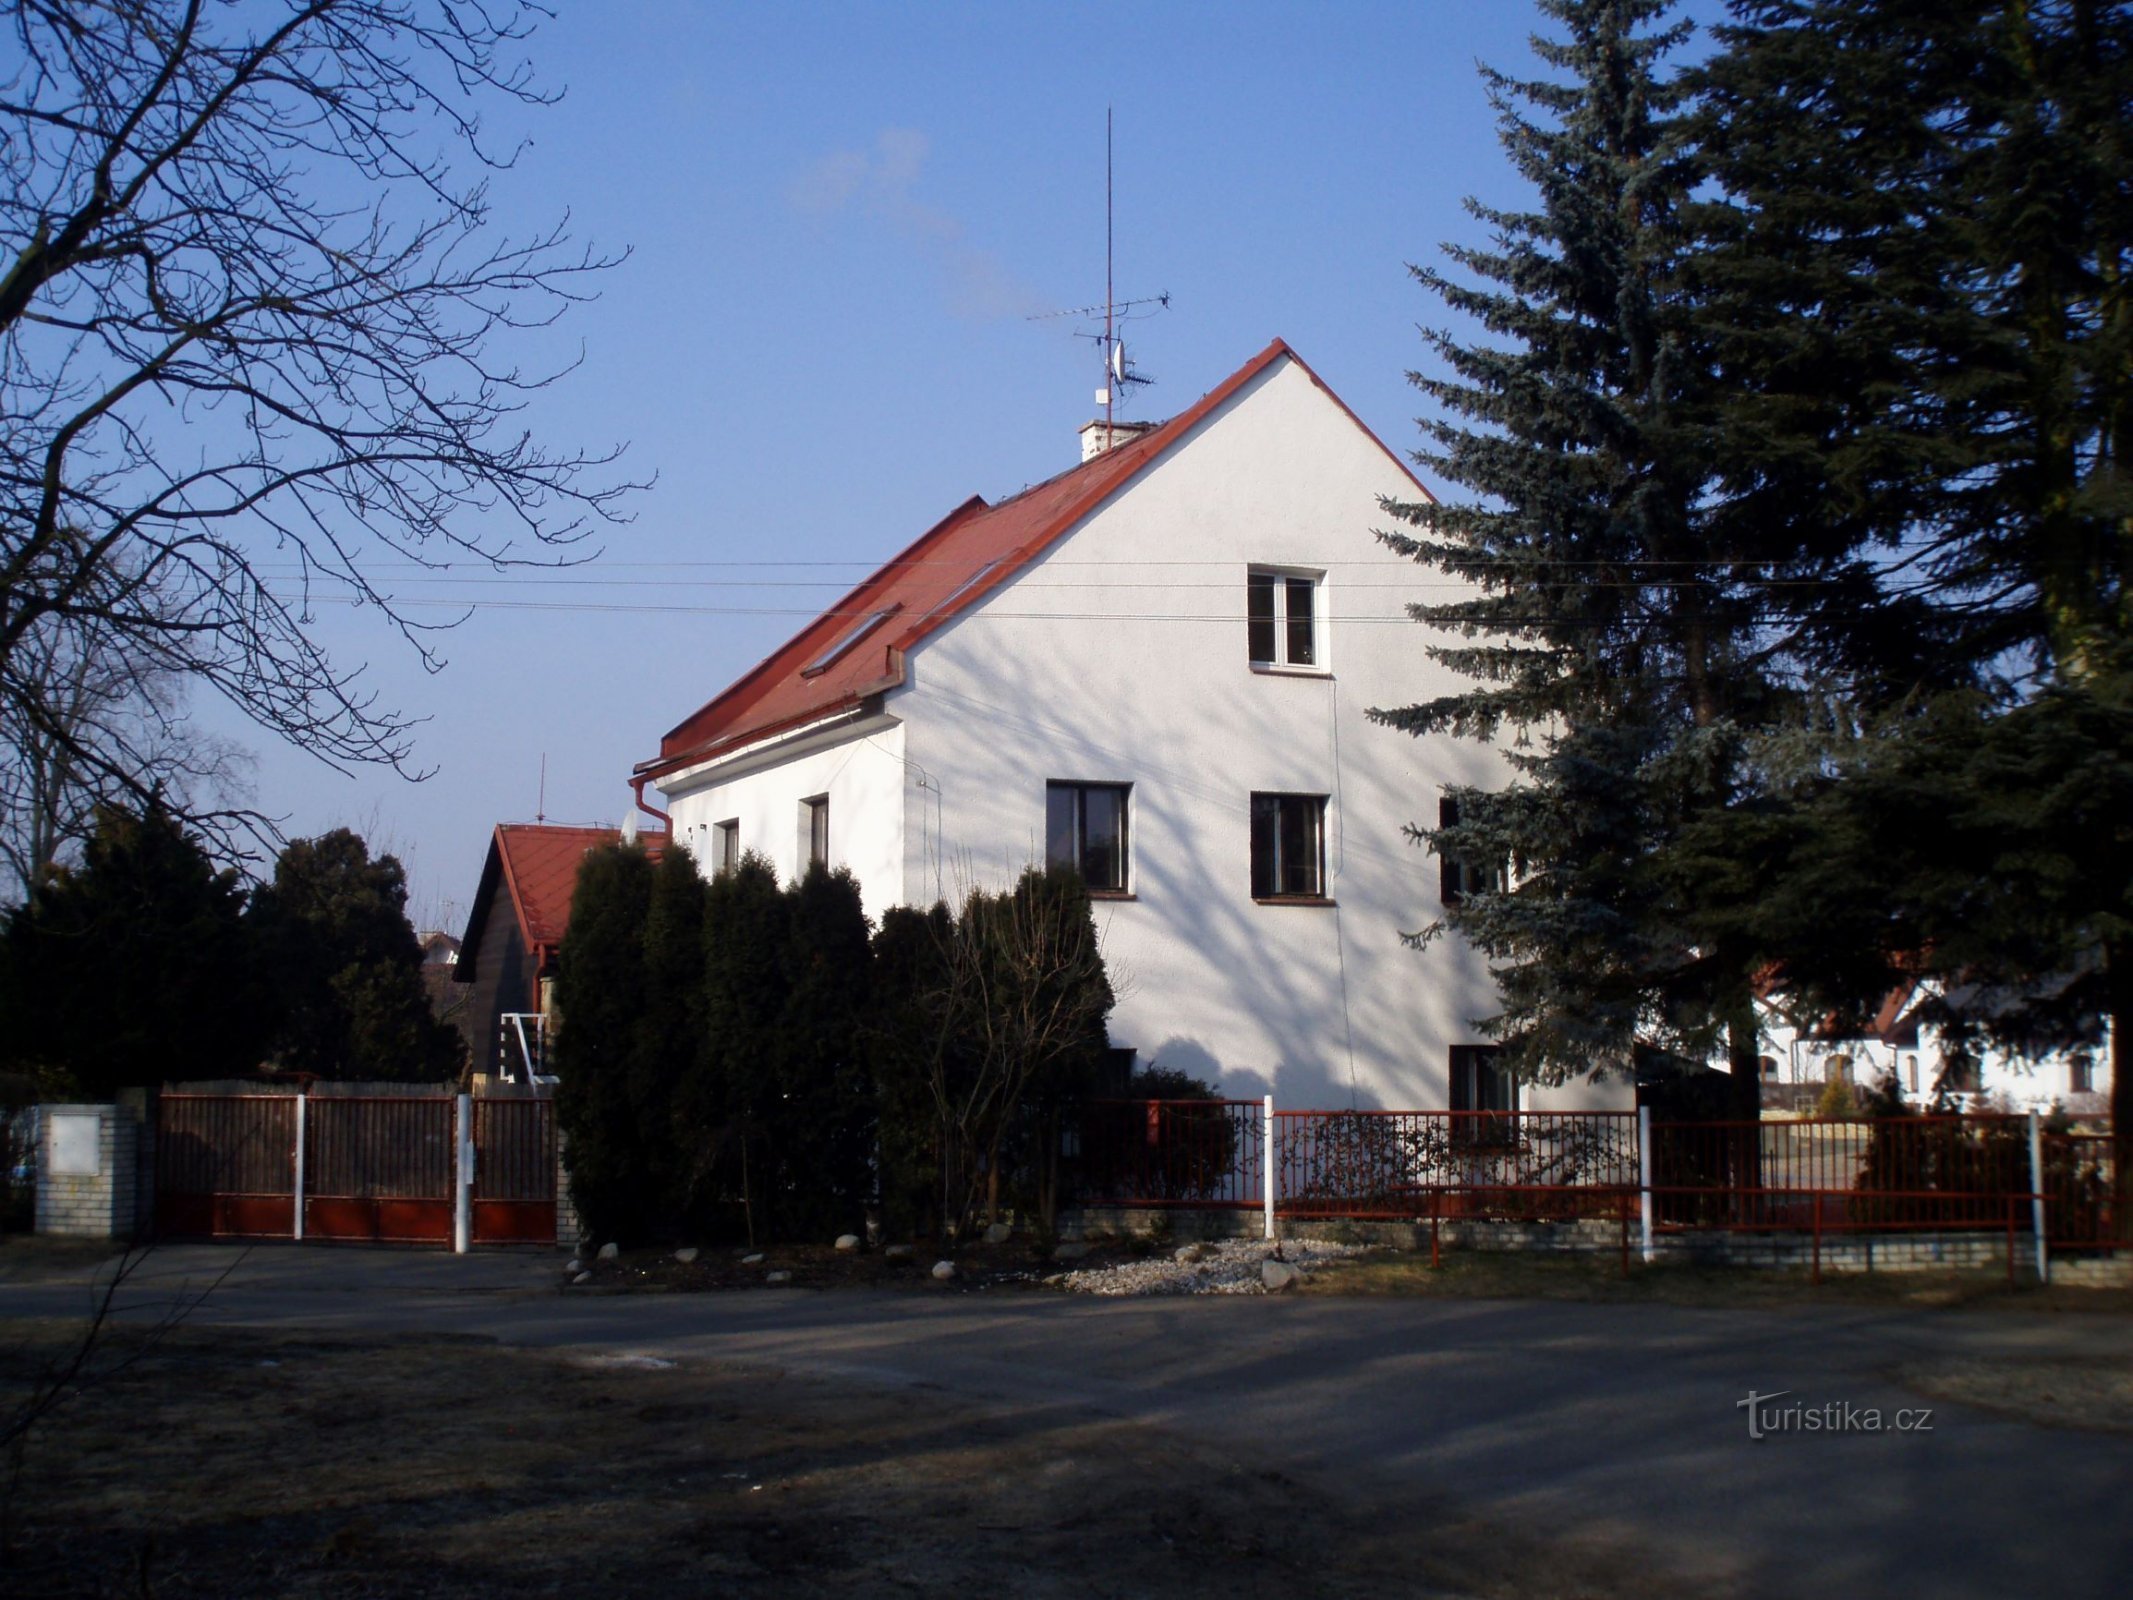 W Hrázka nr 239 (Hradec Králové, 24.2.2011)